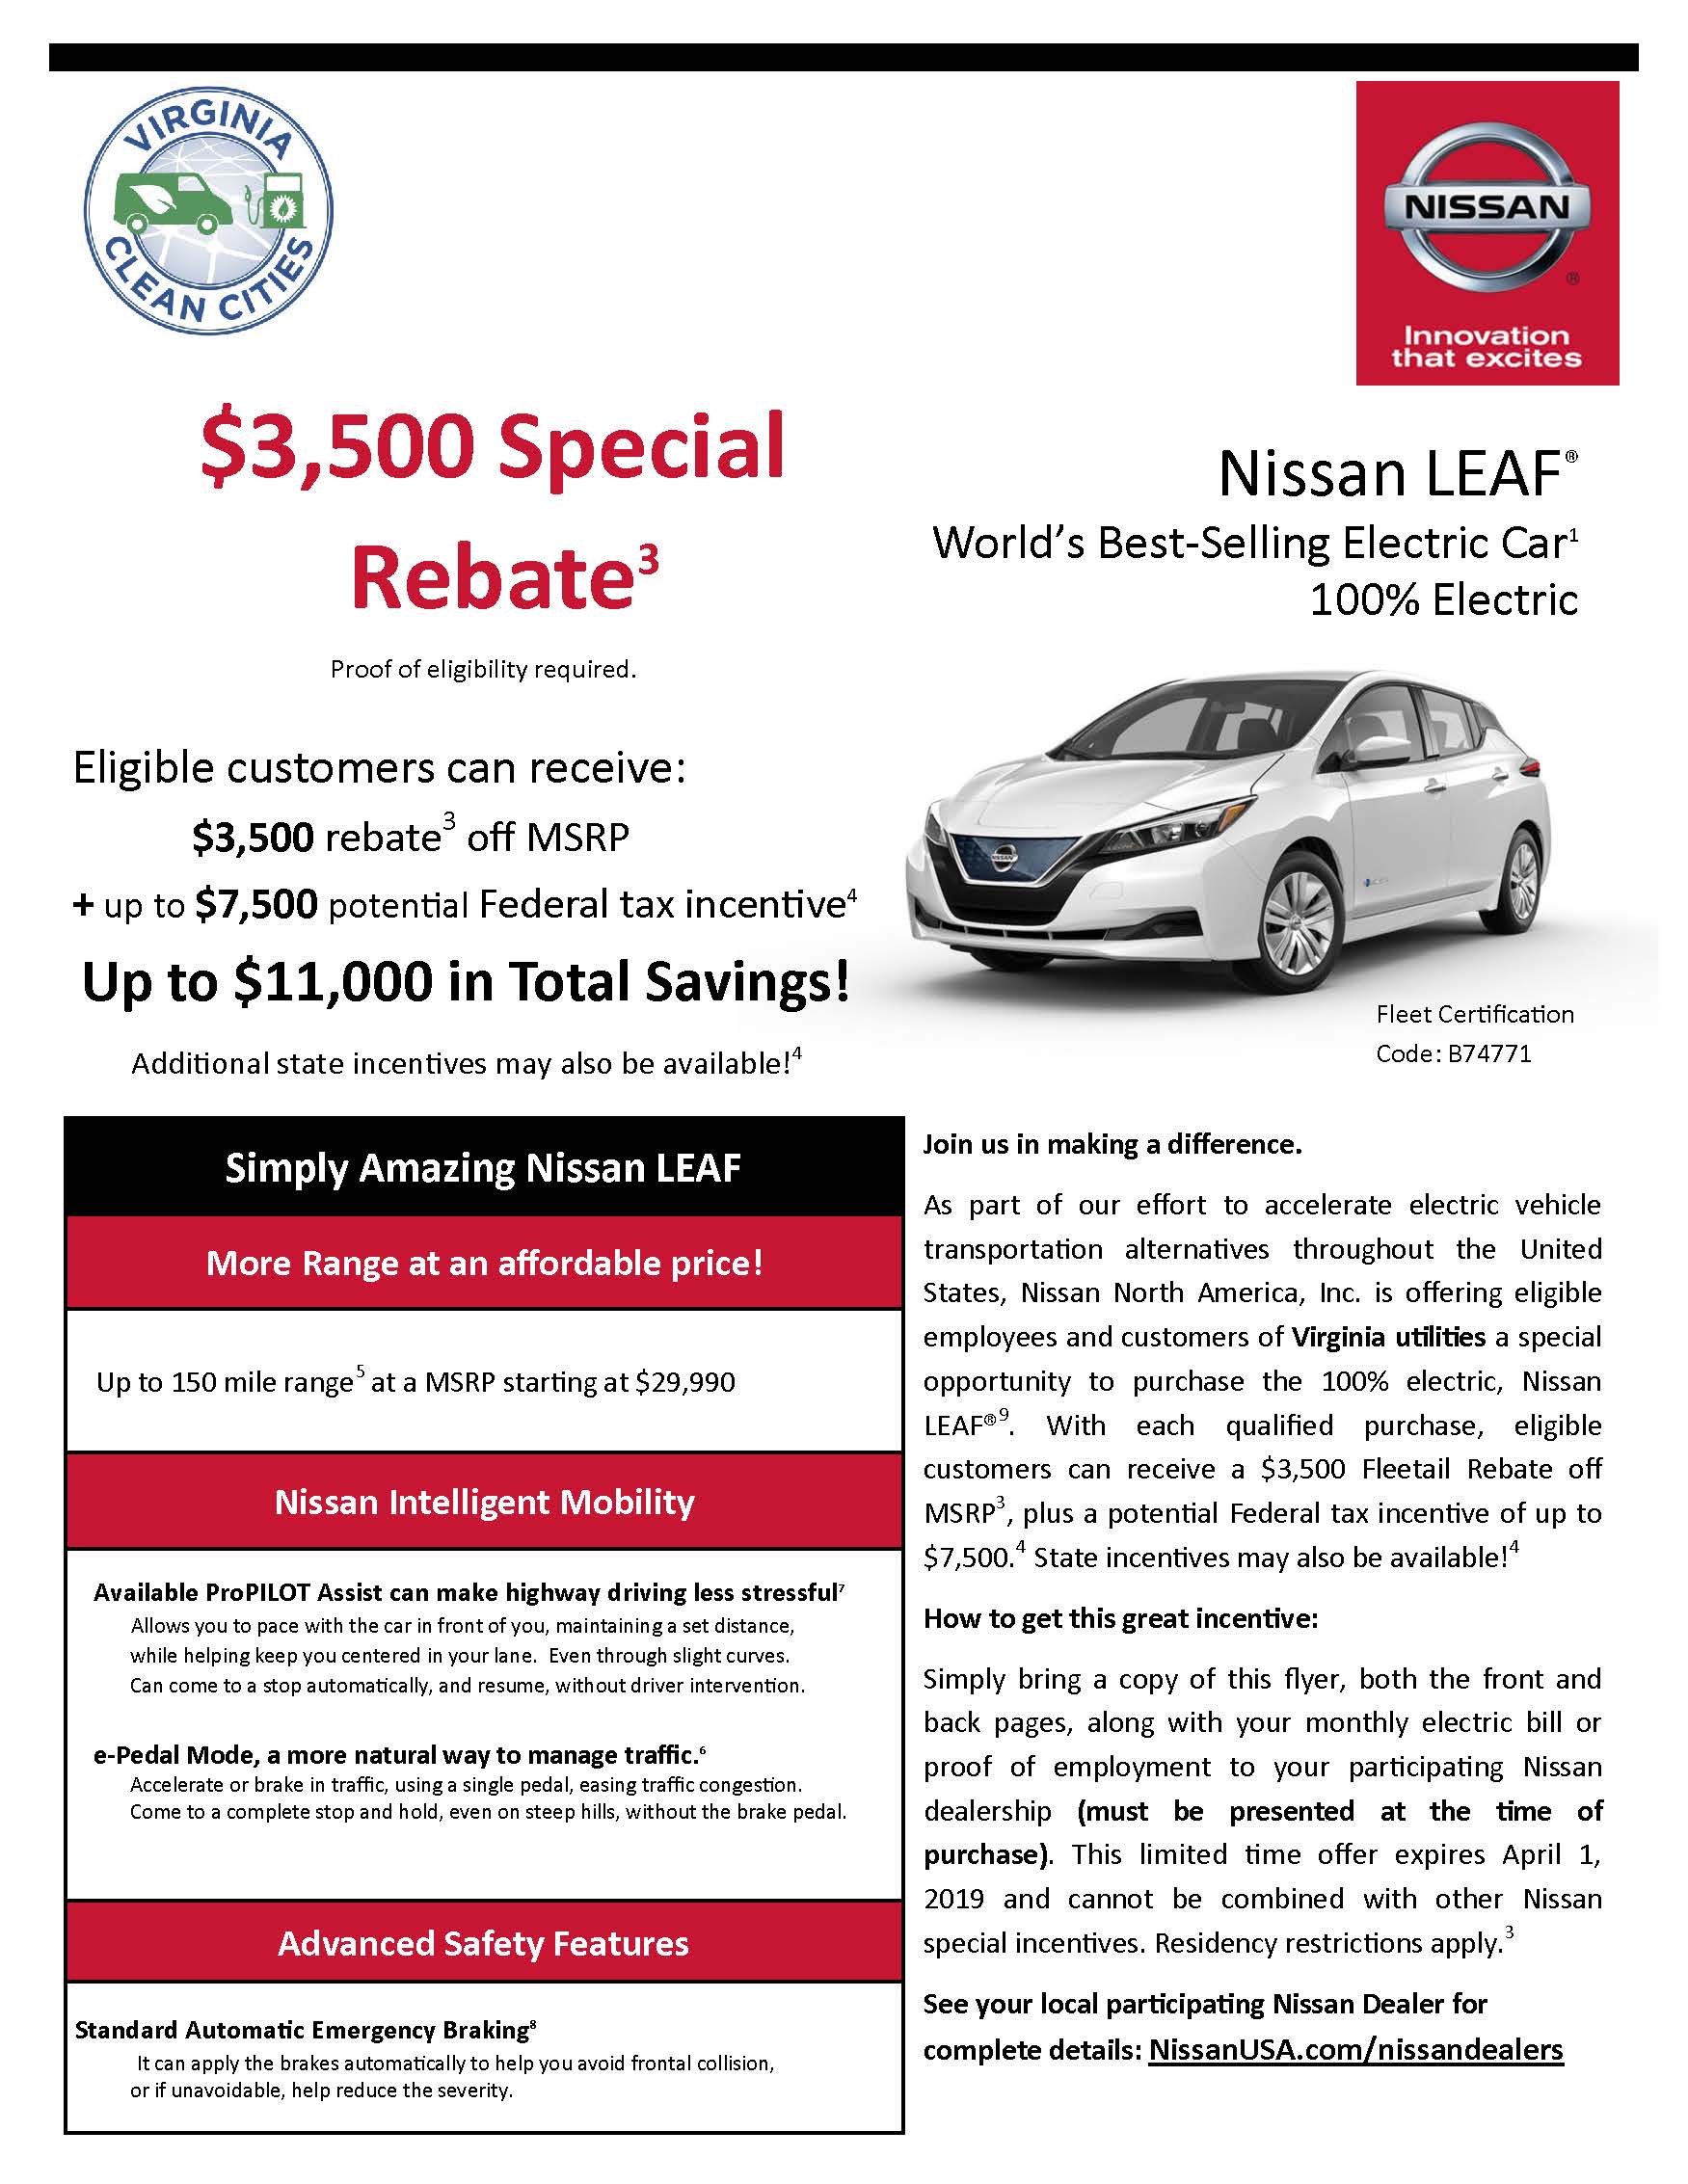 Nissan Used Car Rebates